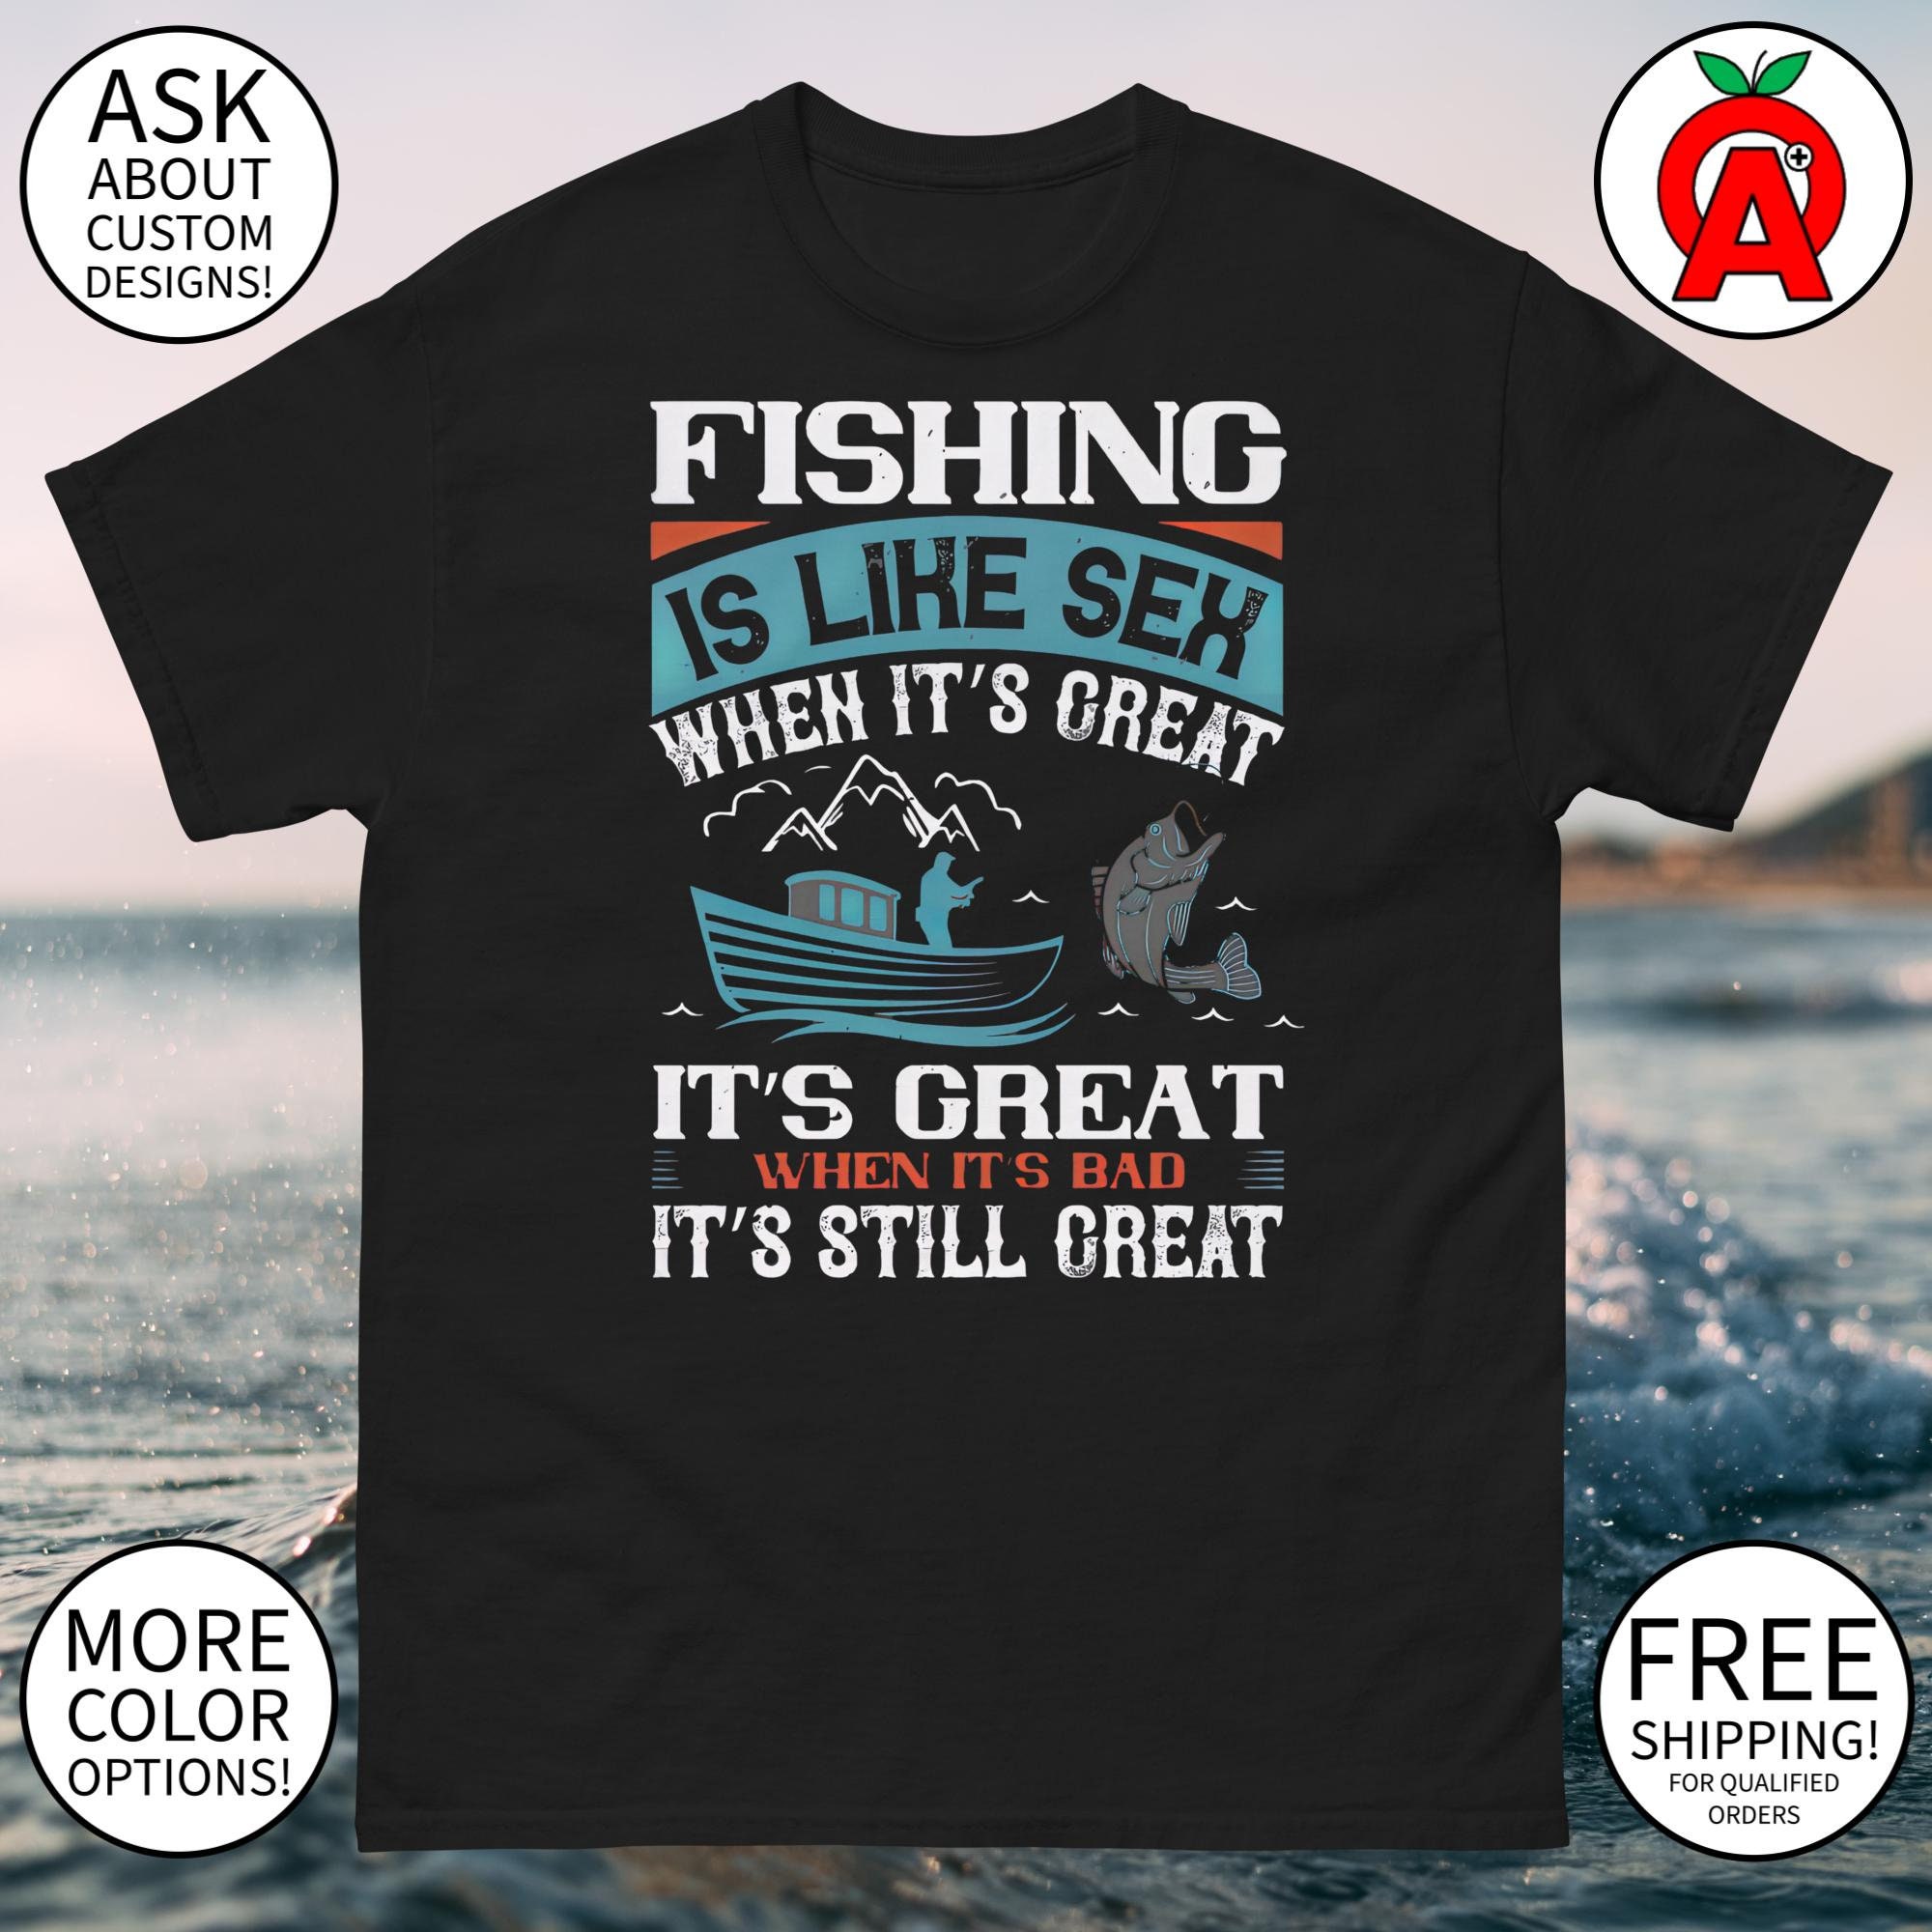 Fishing | Attractive Fishing Shirt for Men and Women | Fishing A Life Changing Game | Fishing Quote Shirts | Fishing Gift for Man